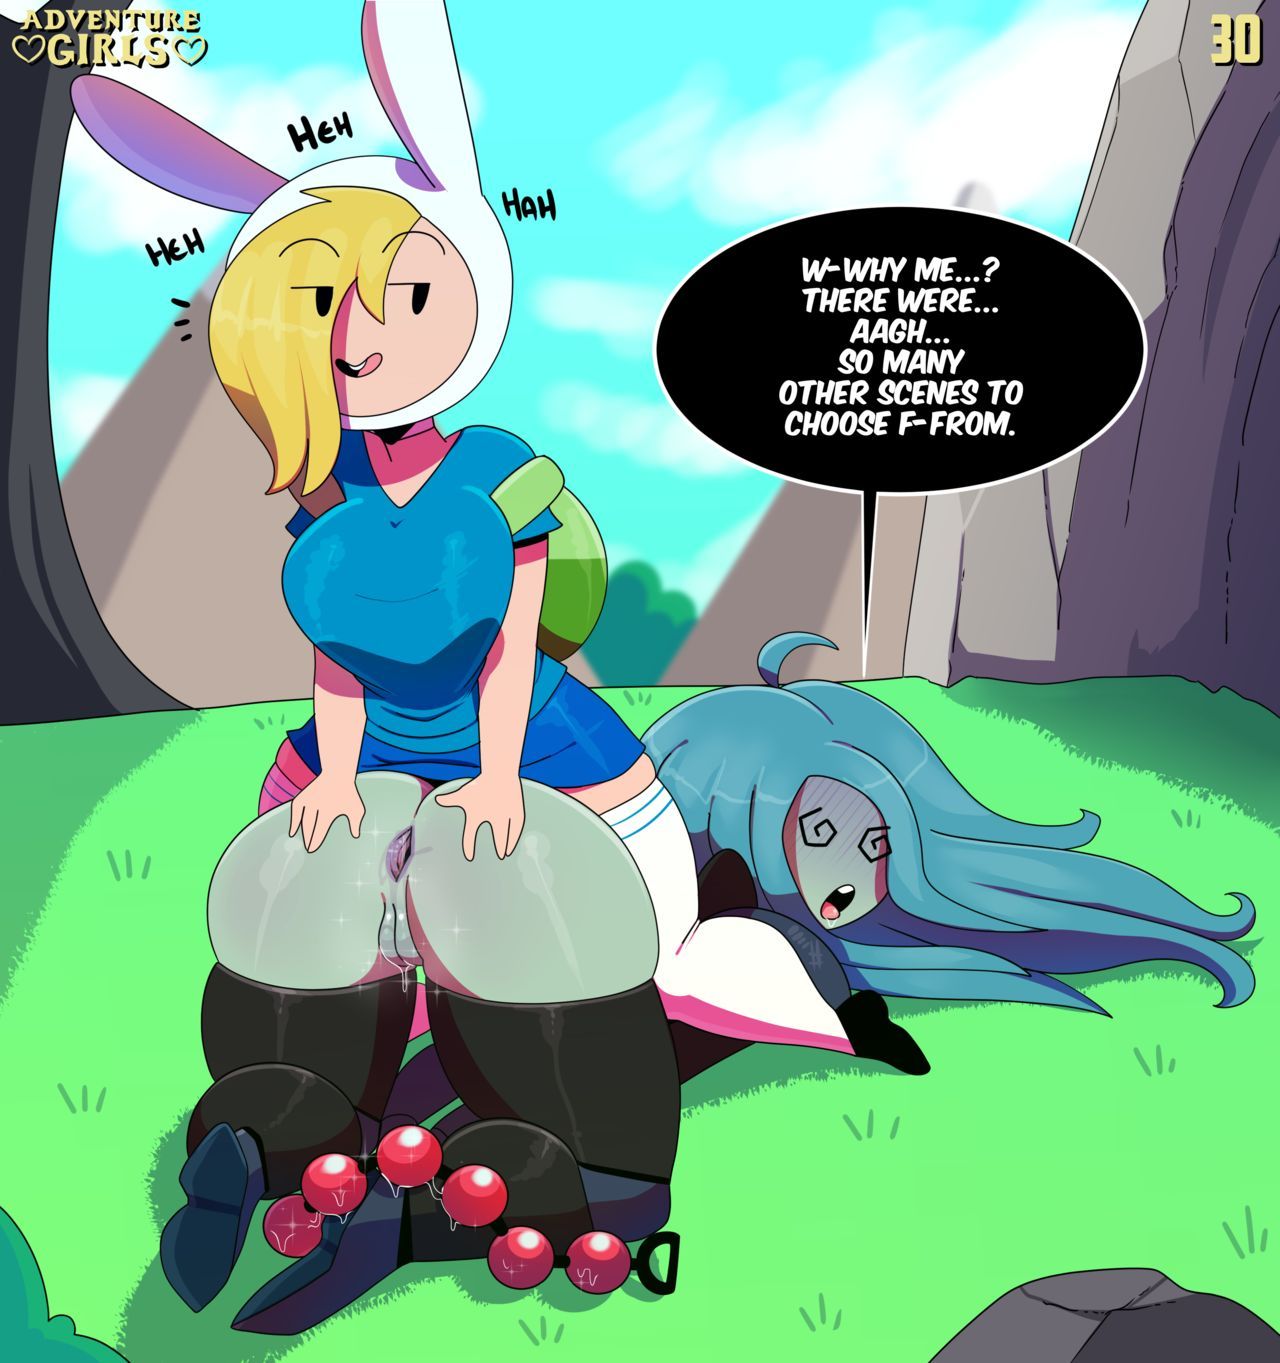 [Somescrub] Adventure Girls (Adventure Time) 30